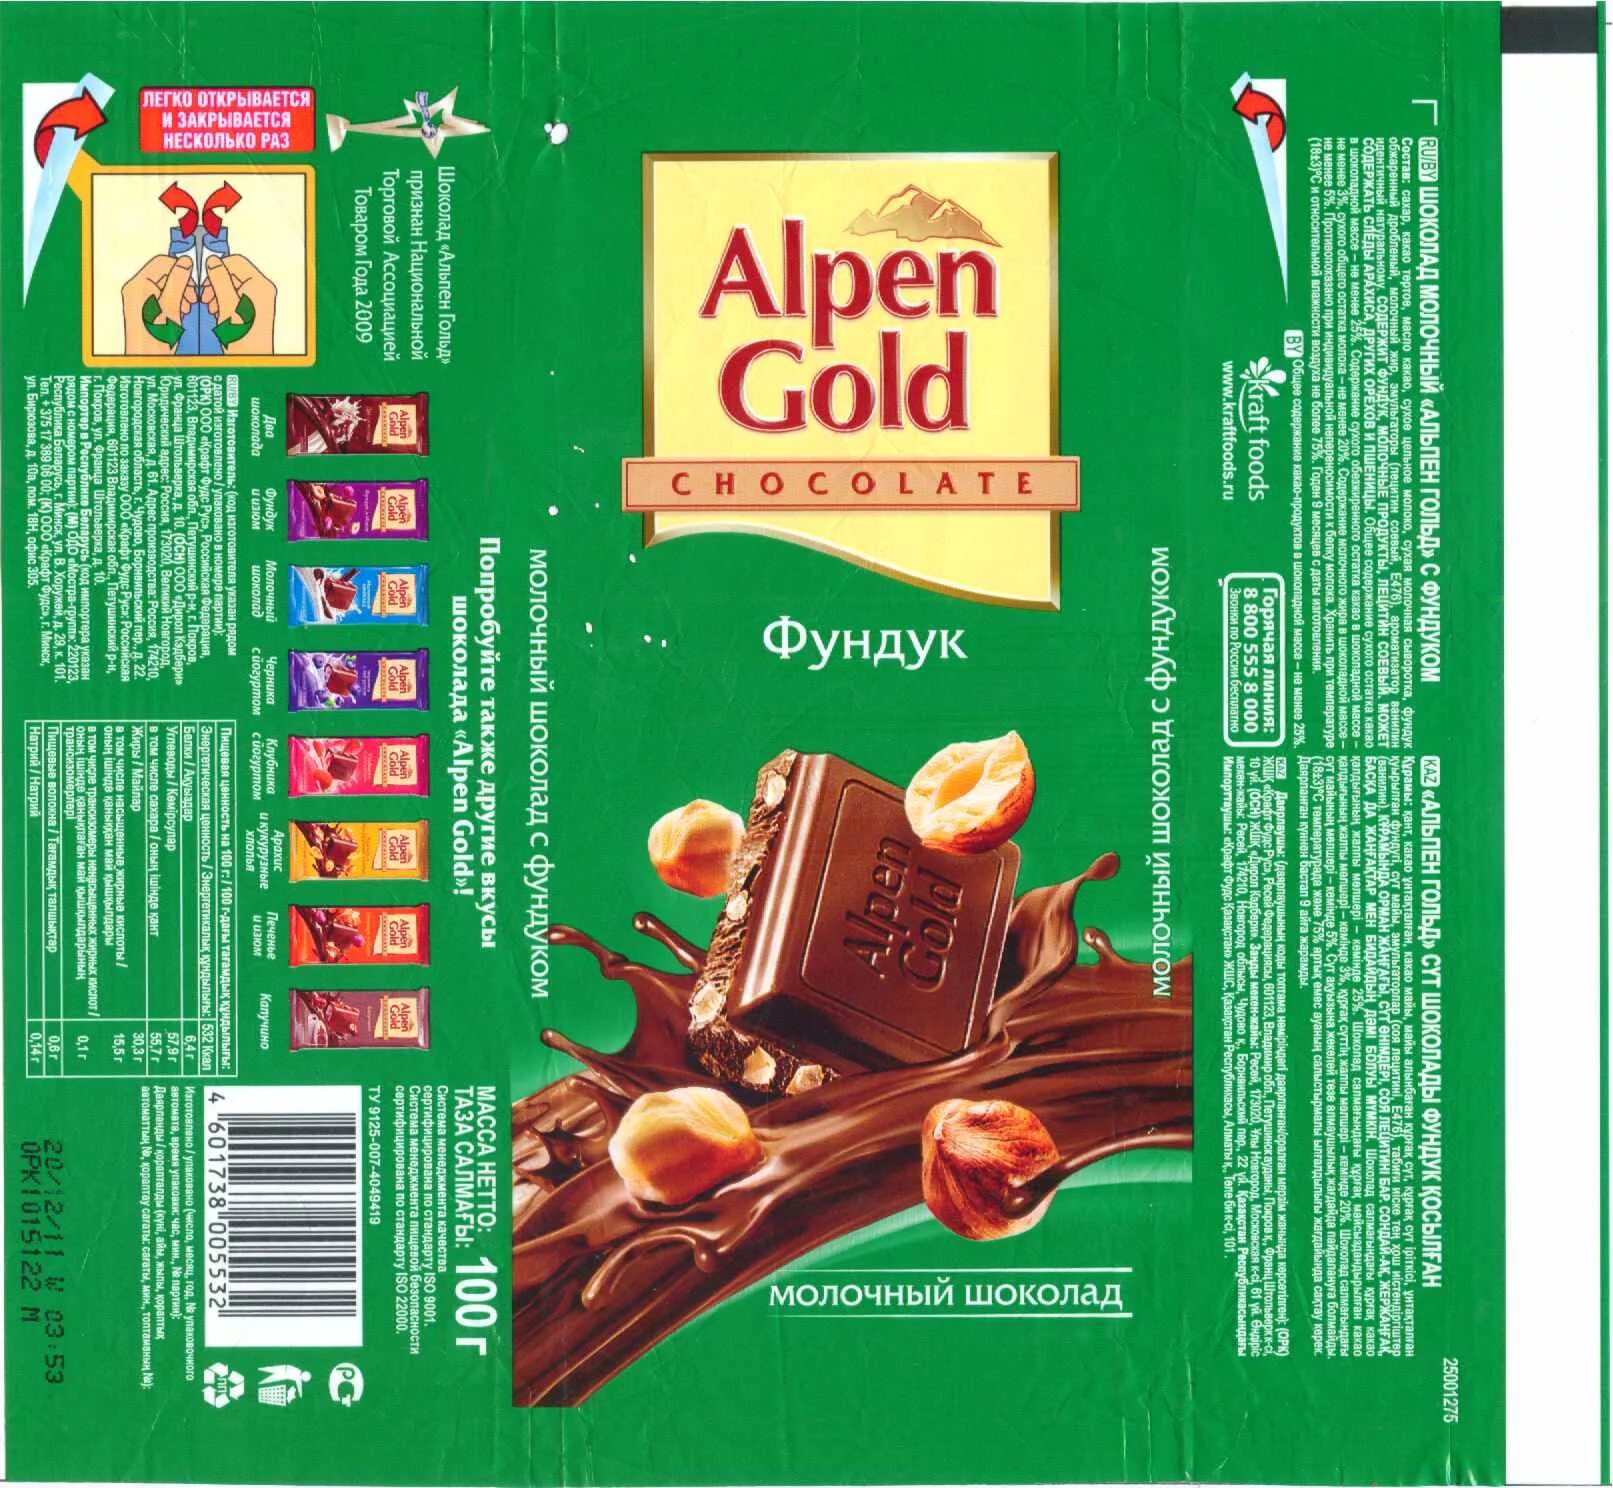 Шоколад Альпен Гольд. Обертка шоколадки Альпен Гольд. Шоколад Альпен Альпен Гольд вес. Шоколад Альпен Гольд 2010-2015.